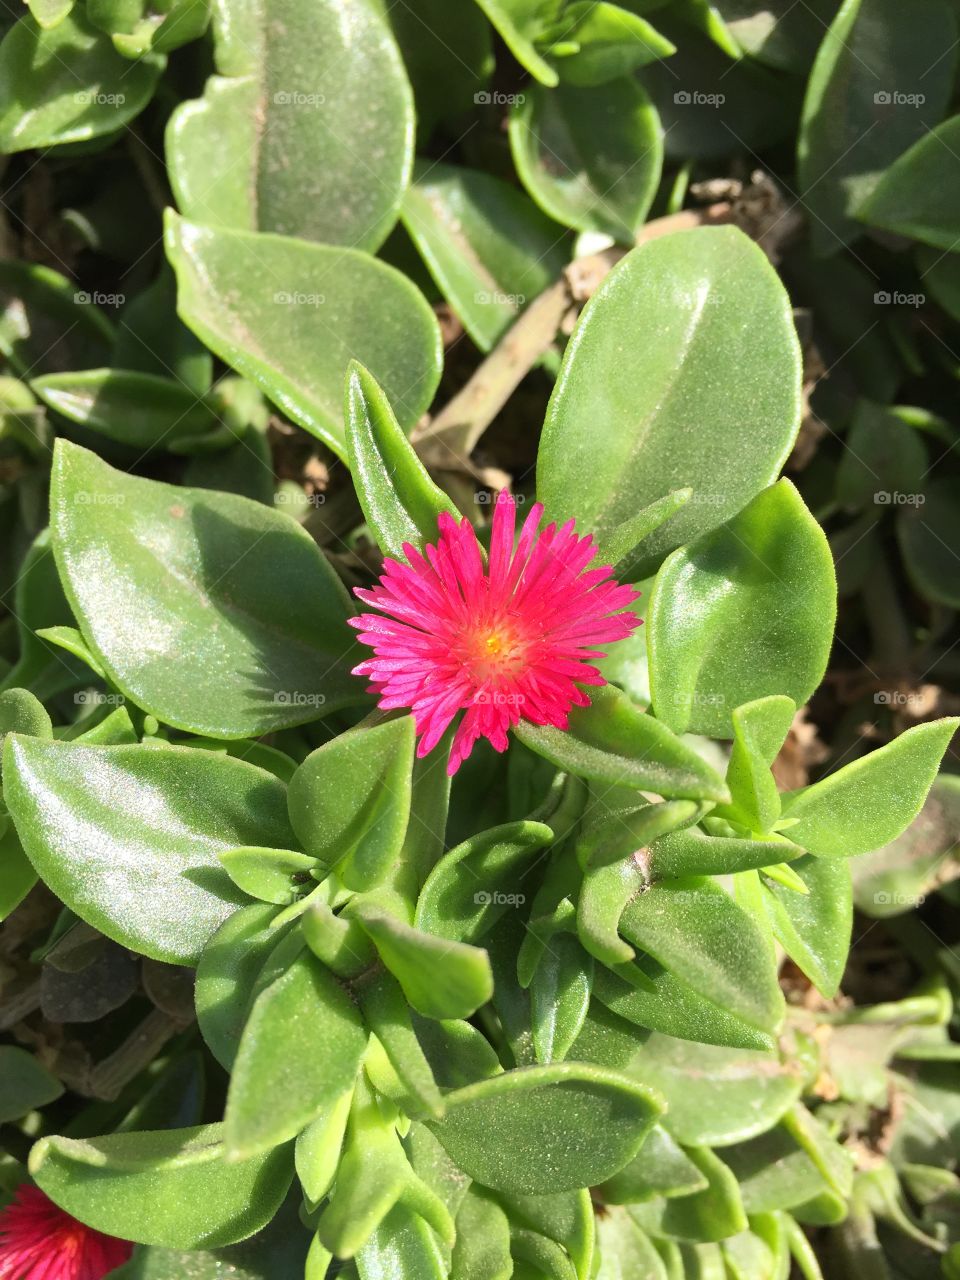 Flowers in Cape Verde